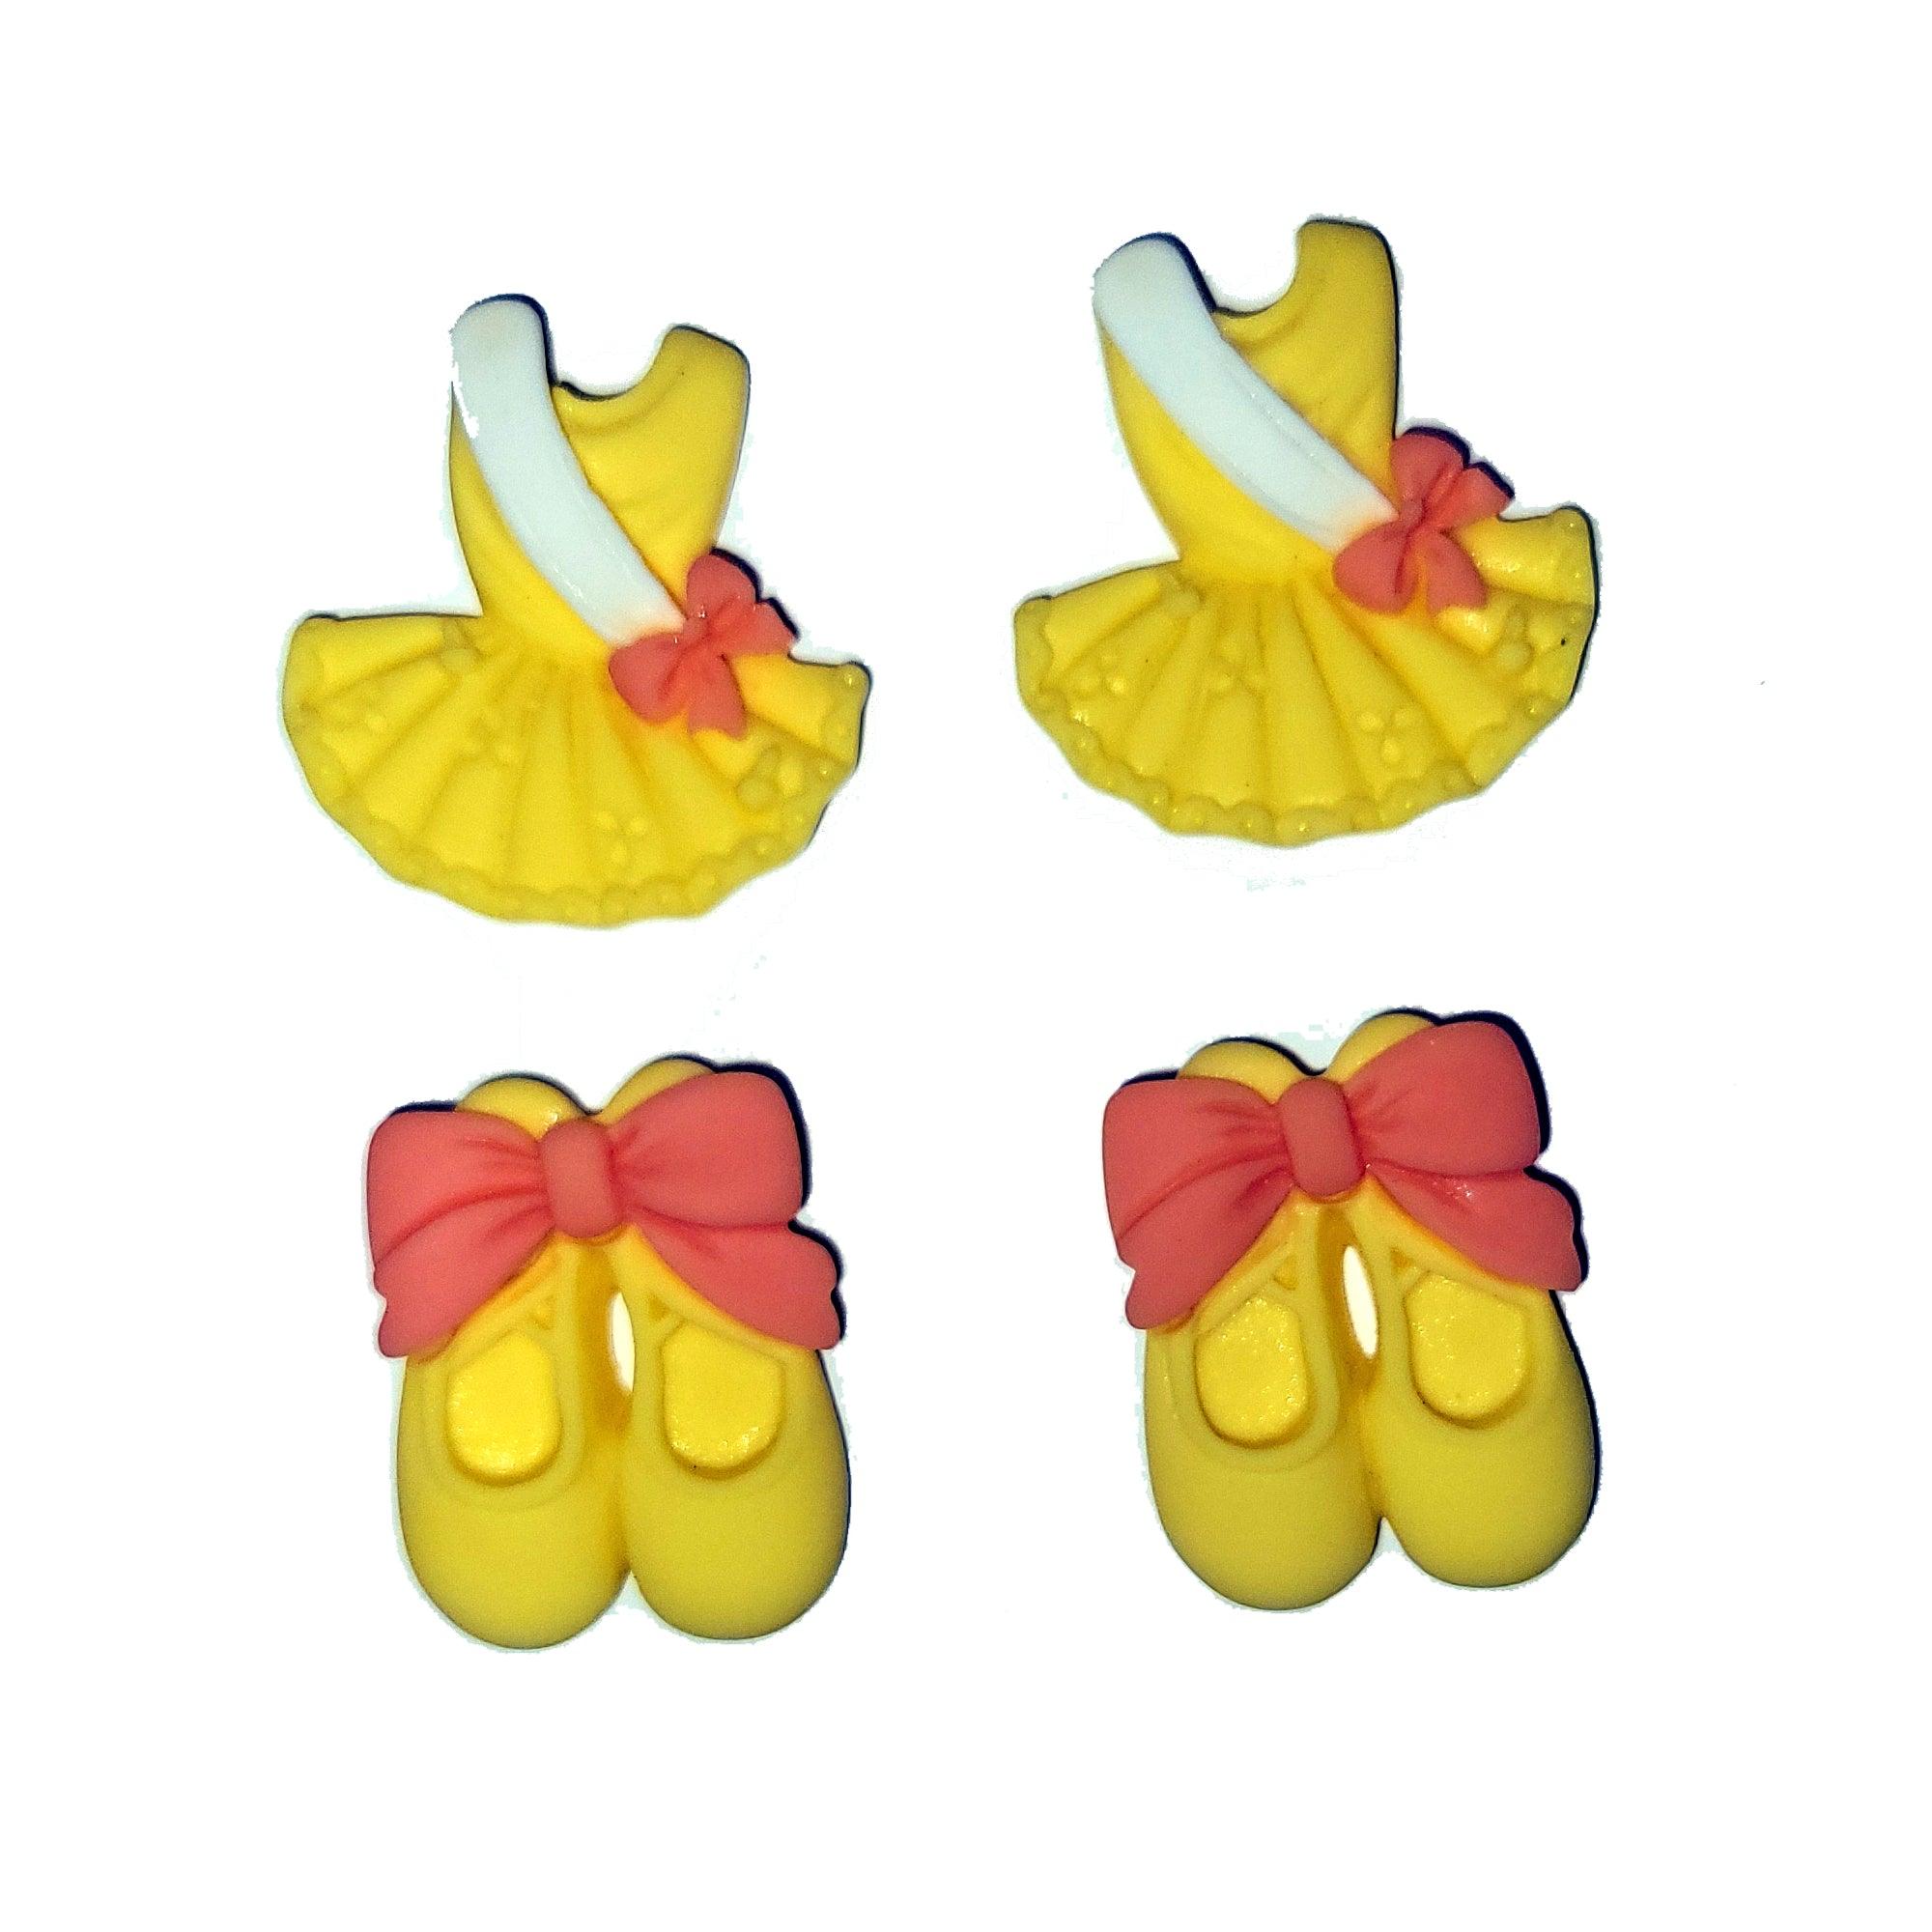 Ballerina Collection Yellow Ballerina Dress & Ballet Shoes Flatback Buttons by SSC Designs - Pkg. of 4